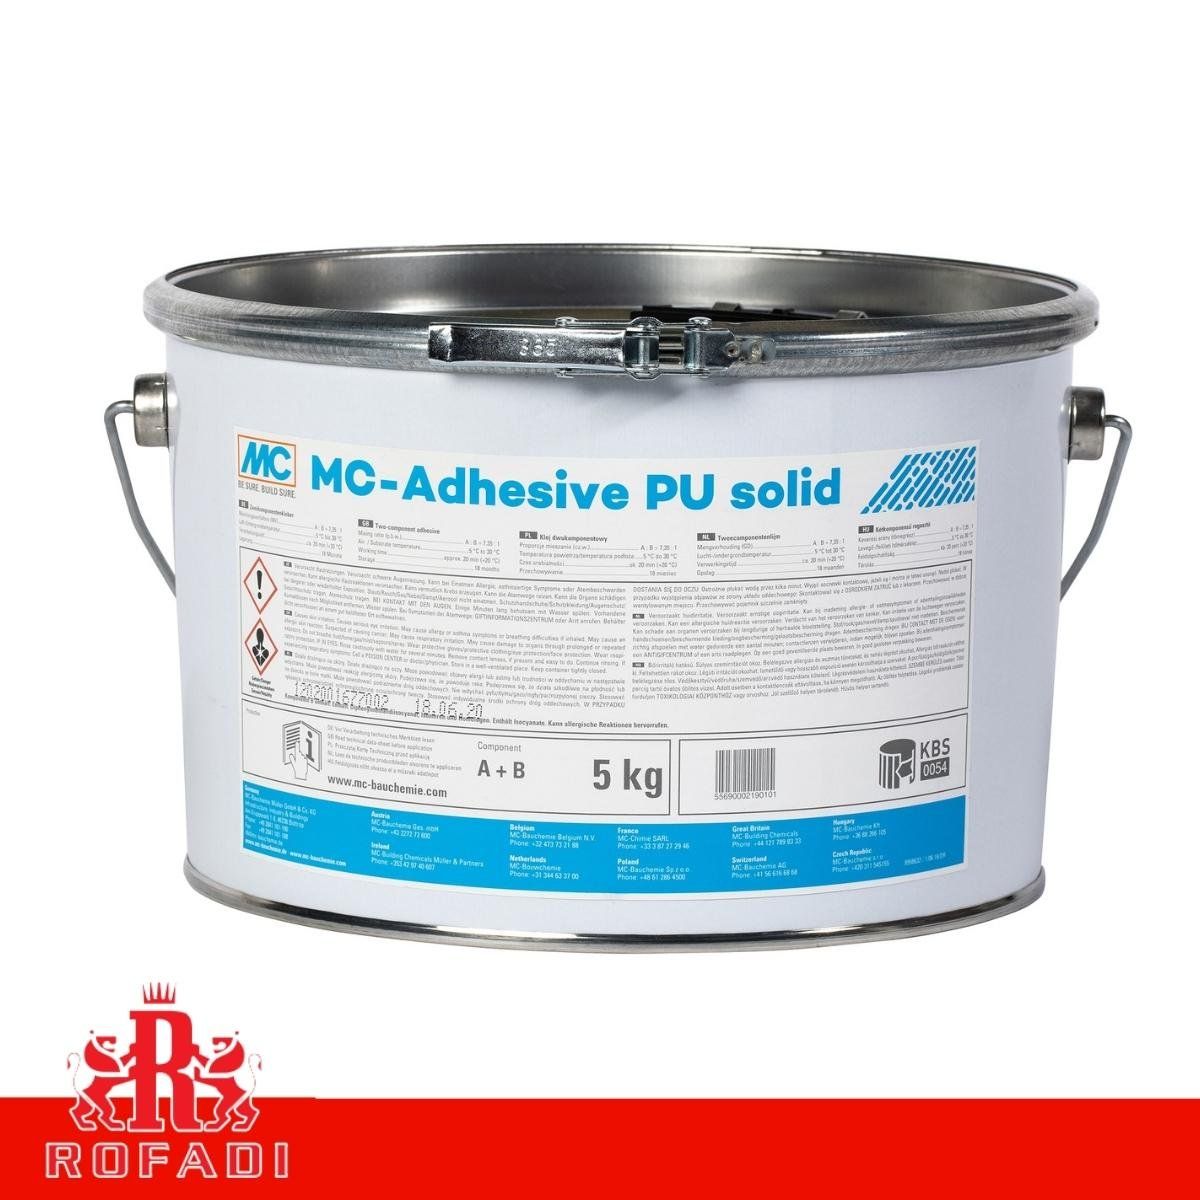  MC-Adhesive PU Solid 